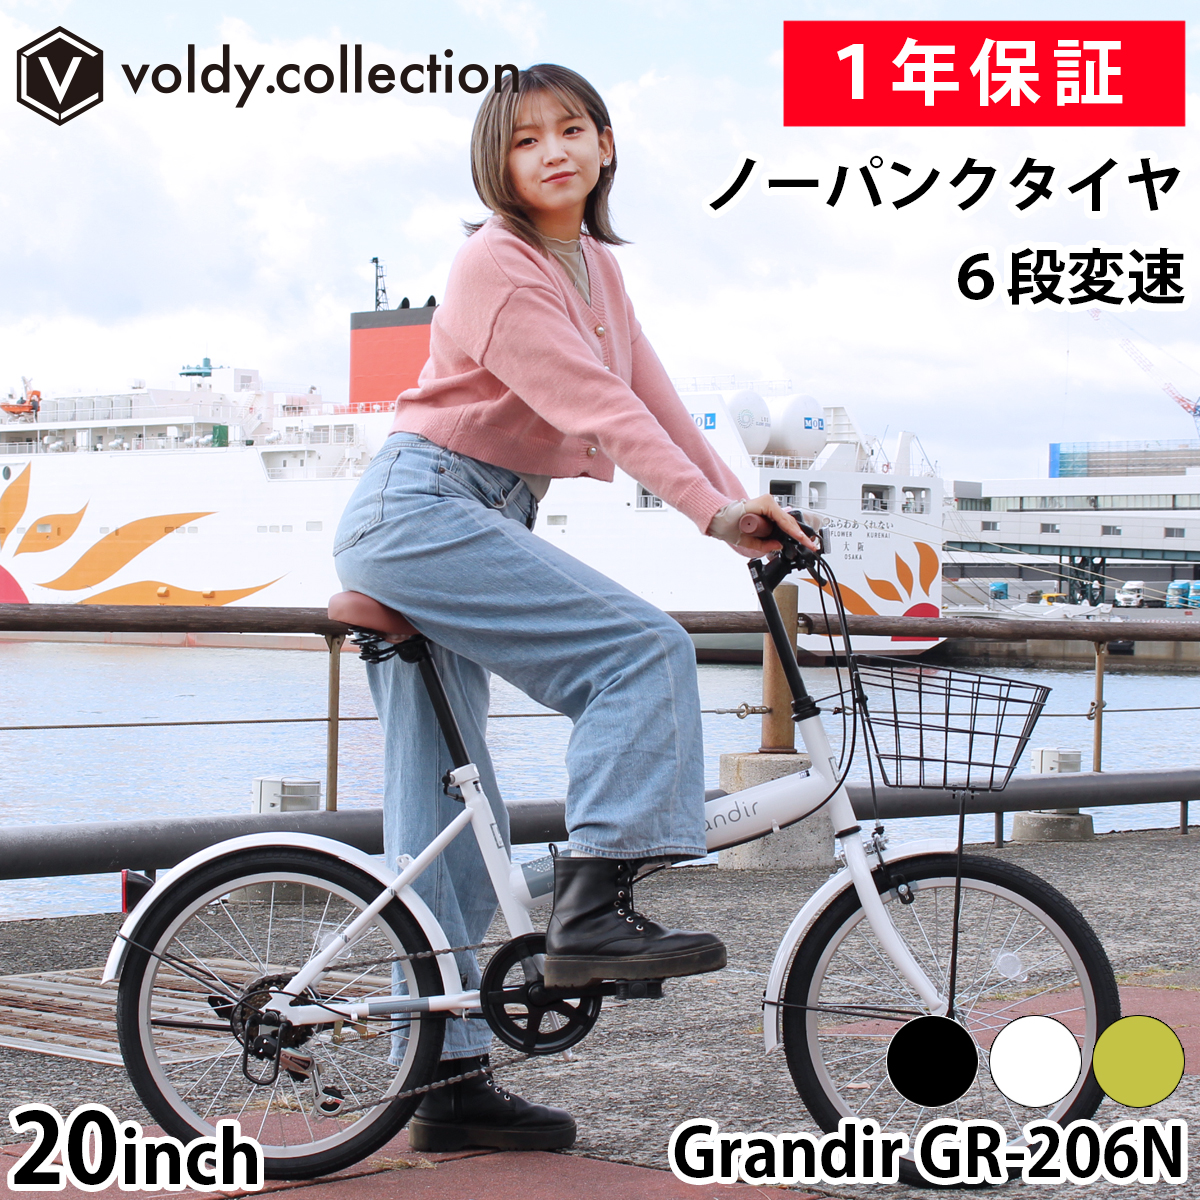 Grandir GR-206N ノーパンク折りたたみ自転車 （ホワイト）の商品画像